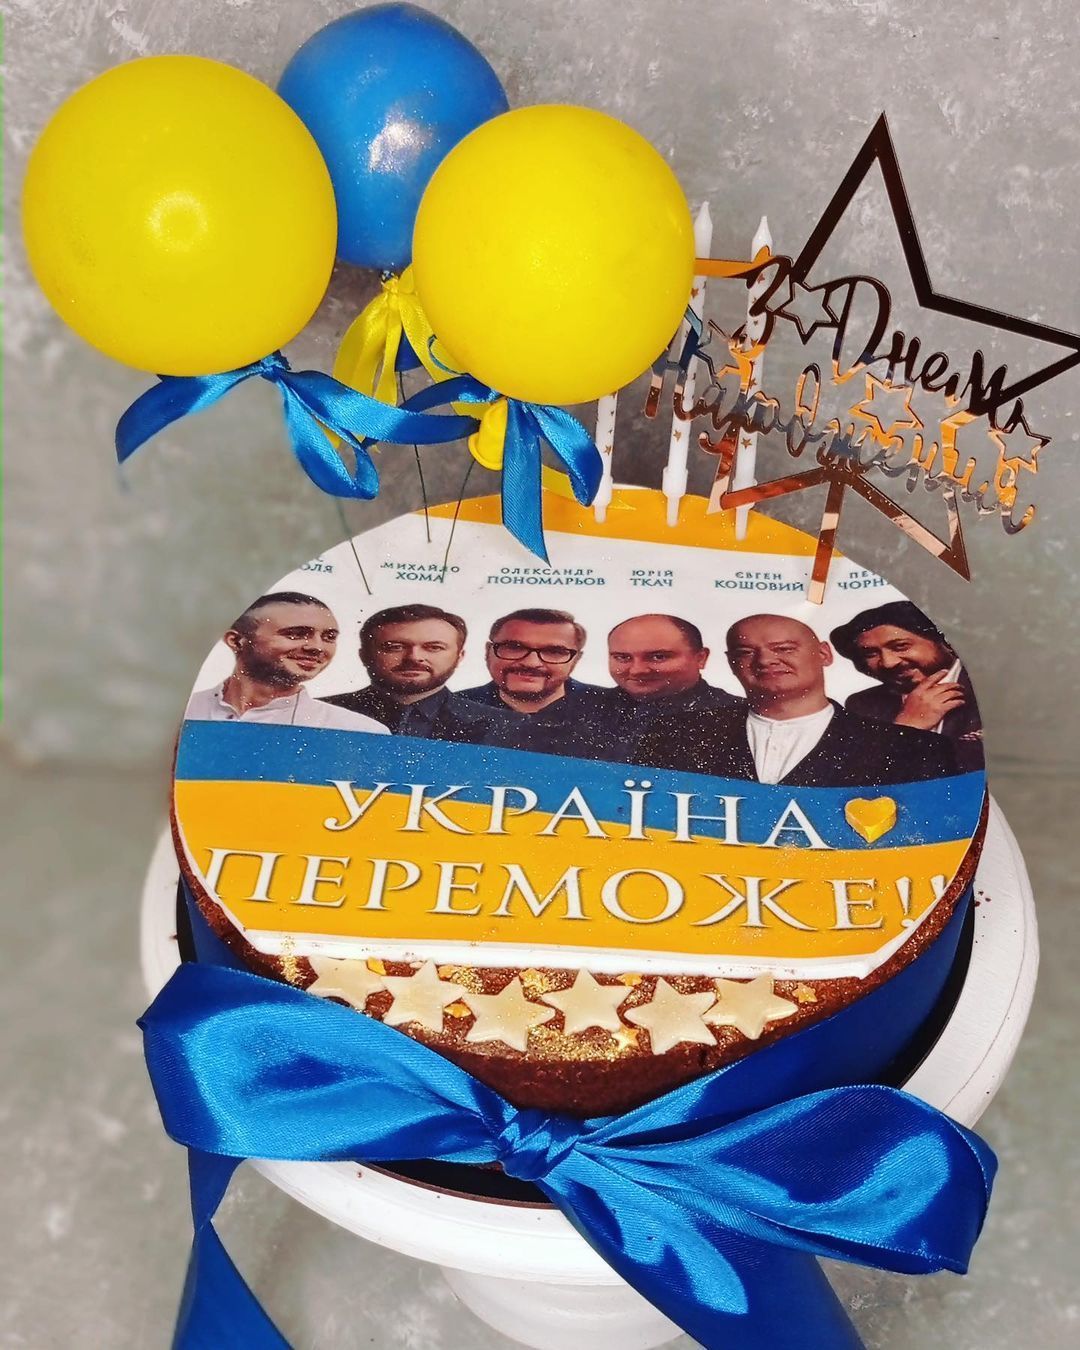 Олександра Пономарьова привітали друзі патріотичним тортом / © instagram.com/ponomaryovoleksandr